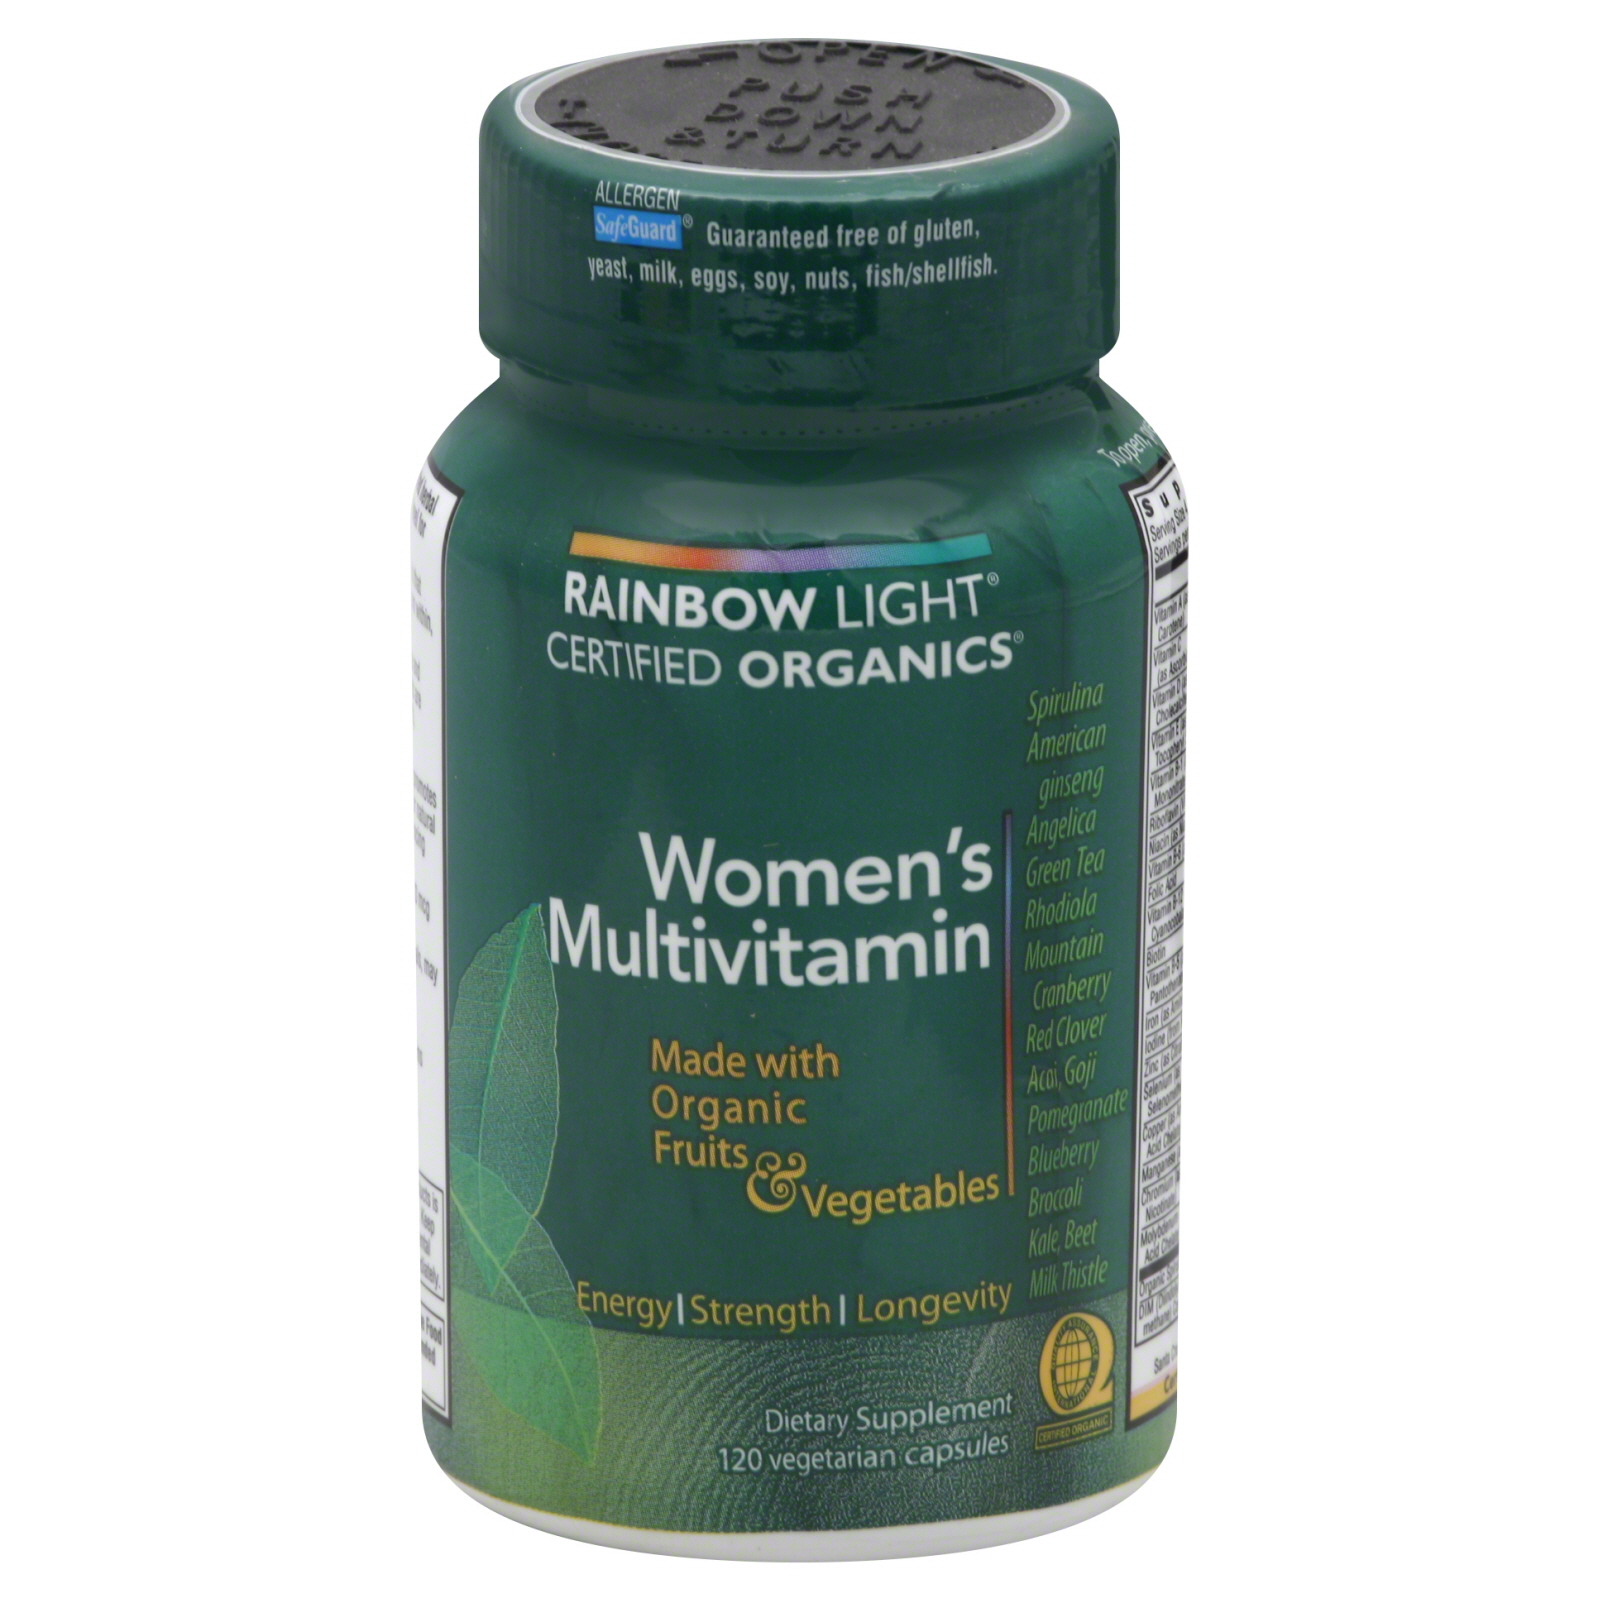 Certified Organics Women's Multivitamin, Vegetarian Capsules, 120 capsules